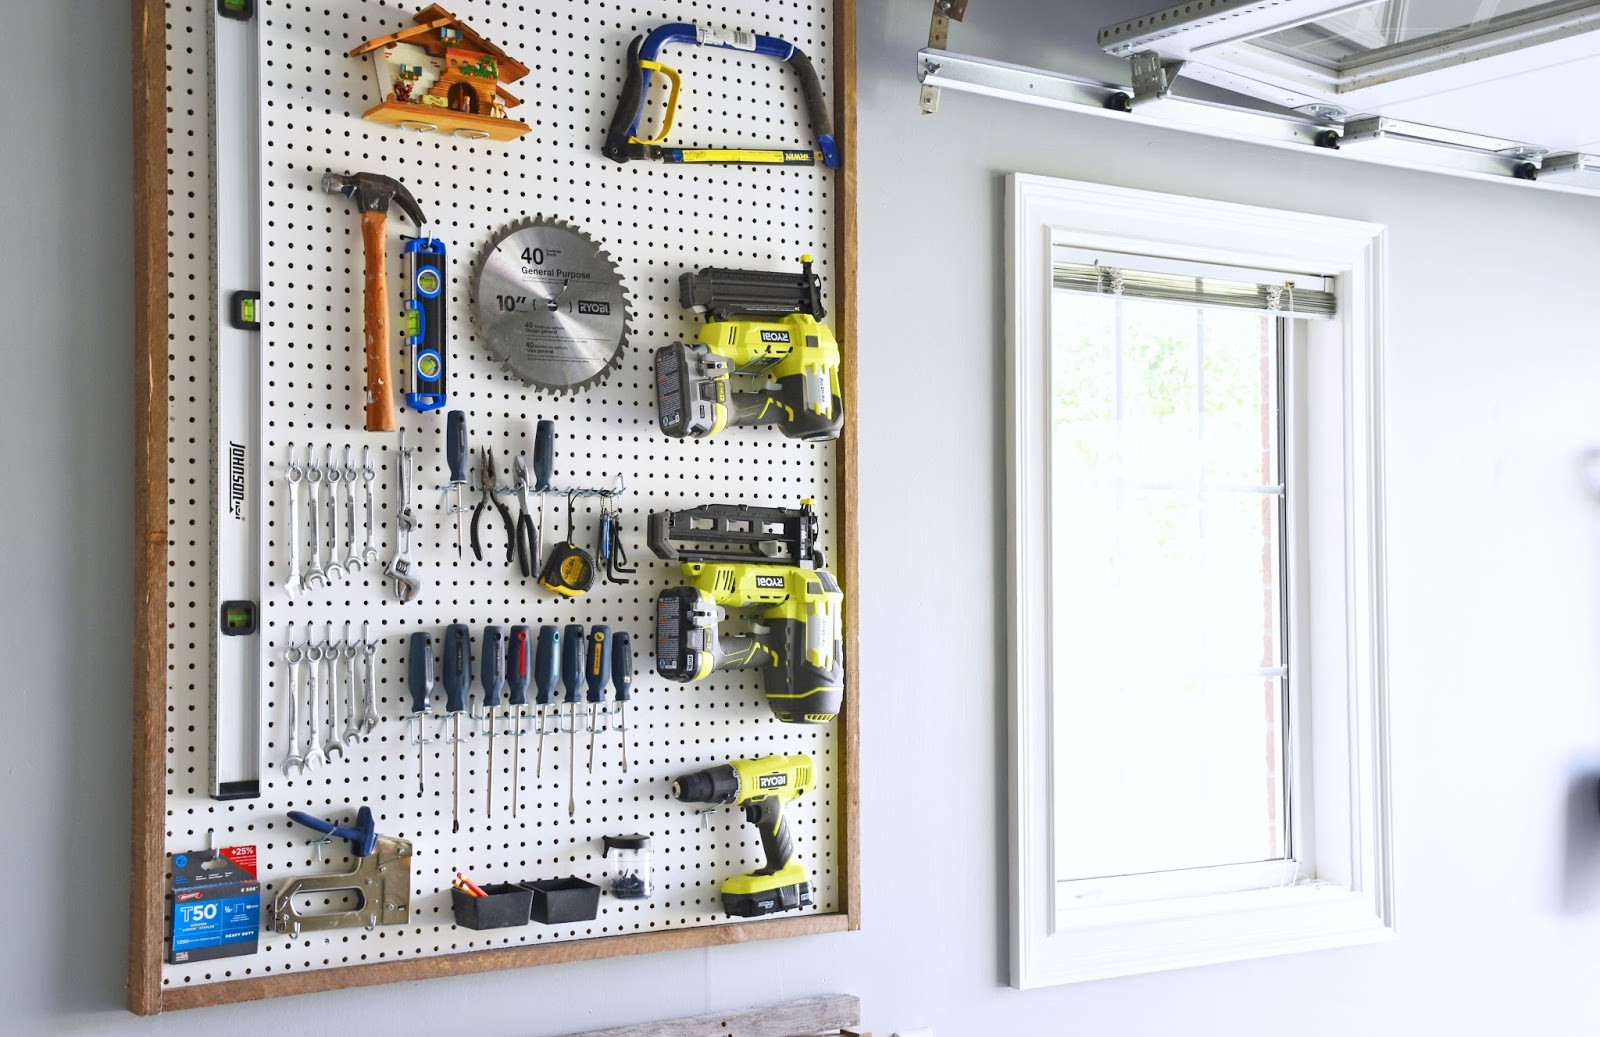 DIY Pegboard Tool Organizer
 Woman in Real Life Garage Organization DIY Pegboard